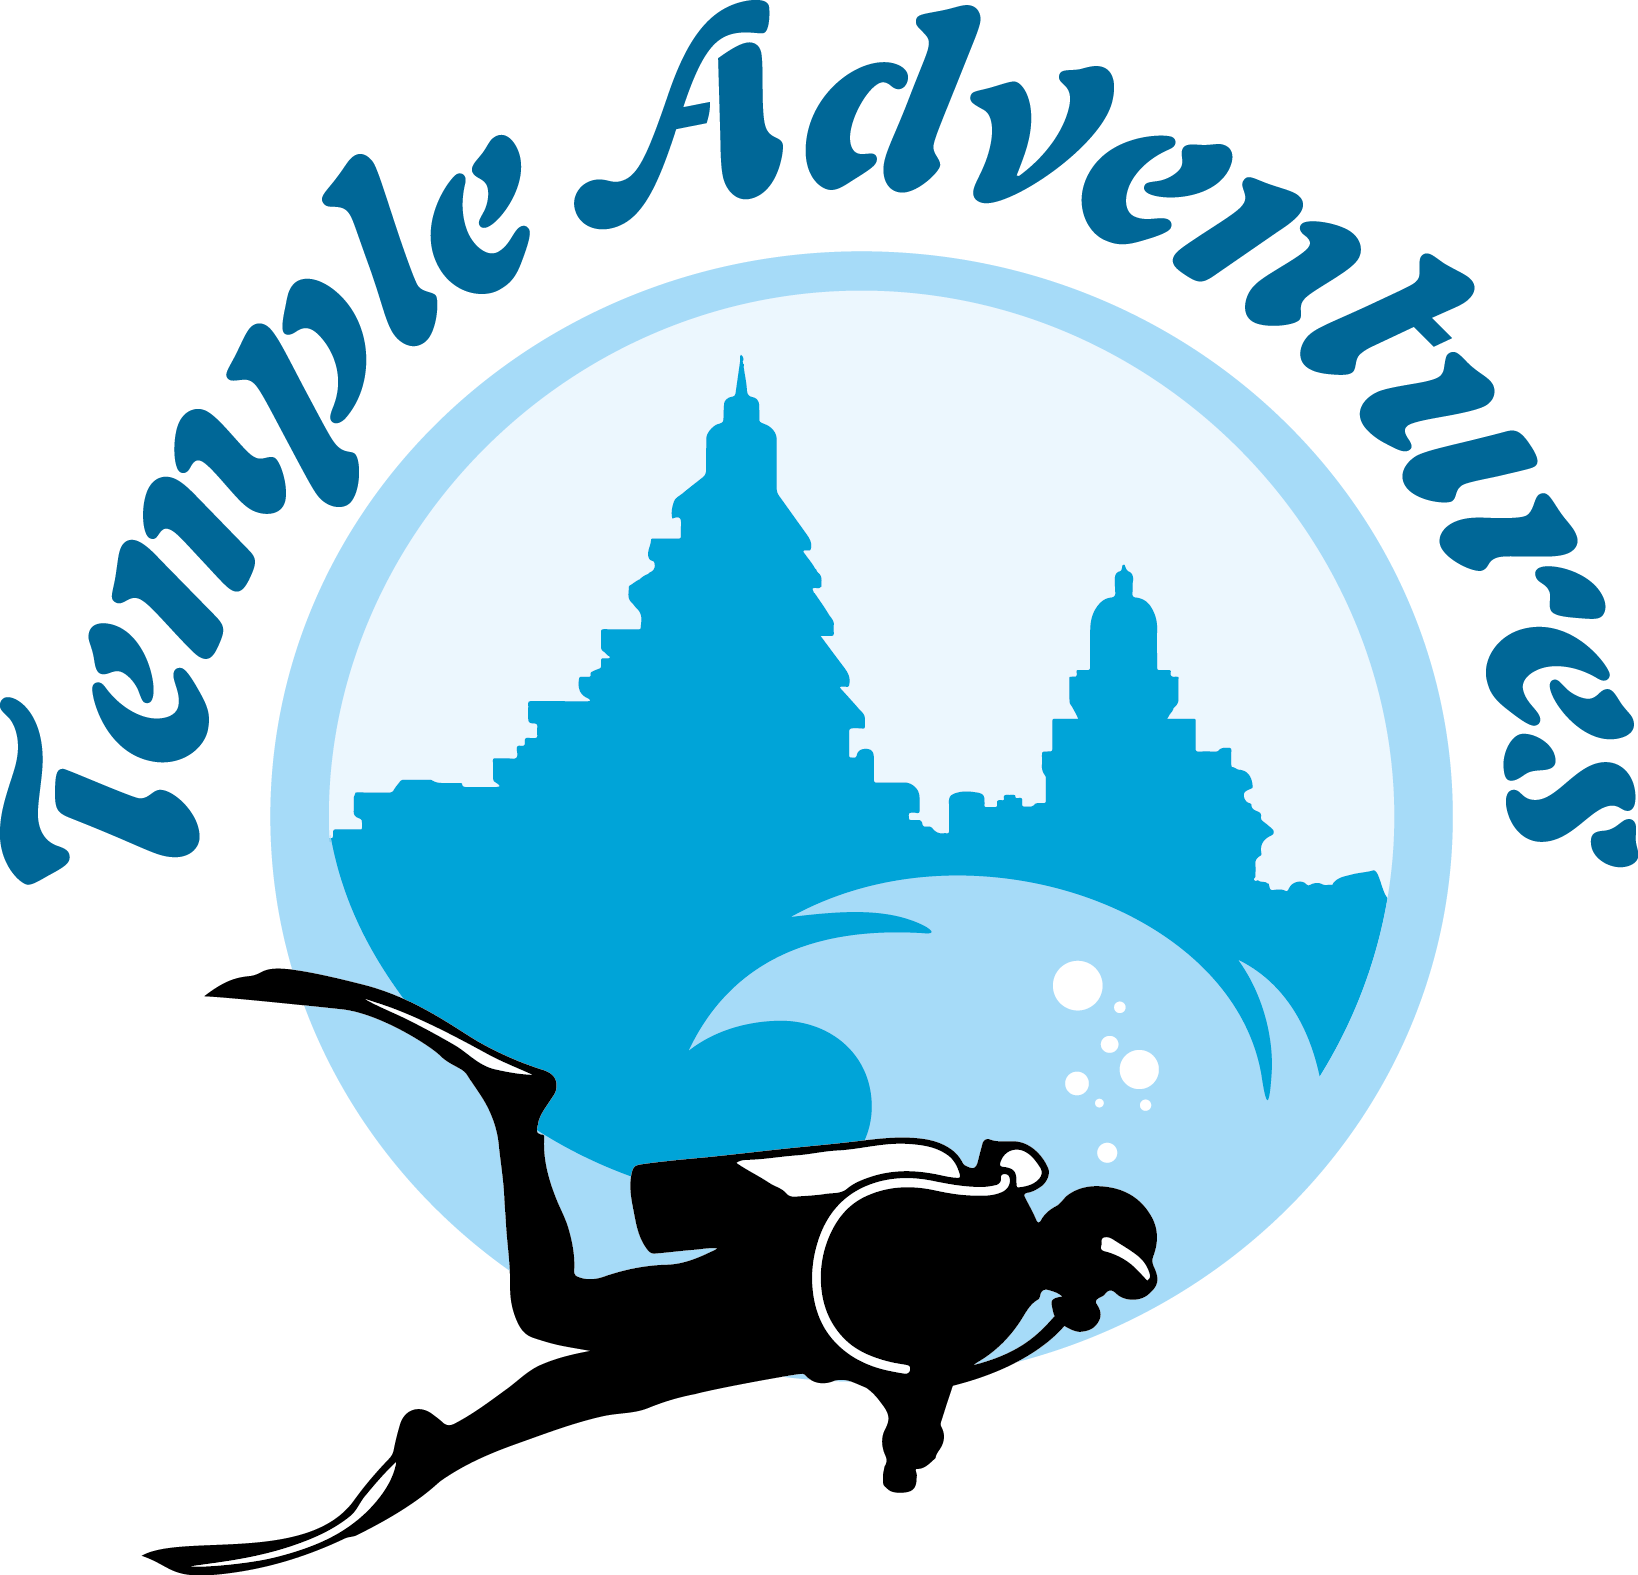 File:Jojo's Bizarre Adventure (English logo).png - Wikipedia